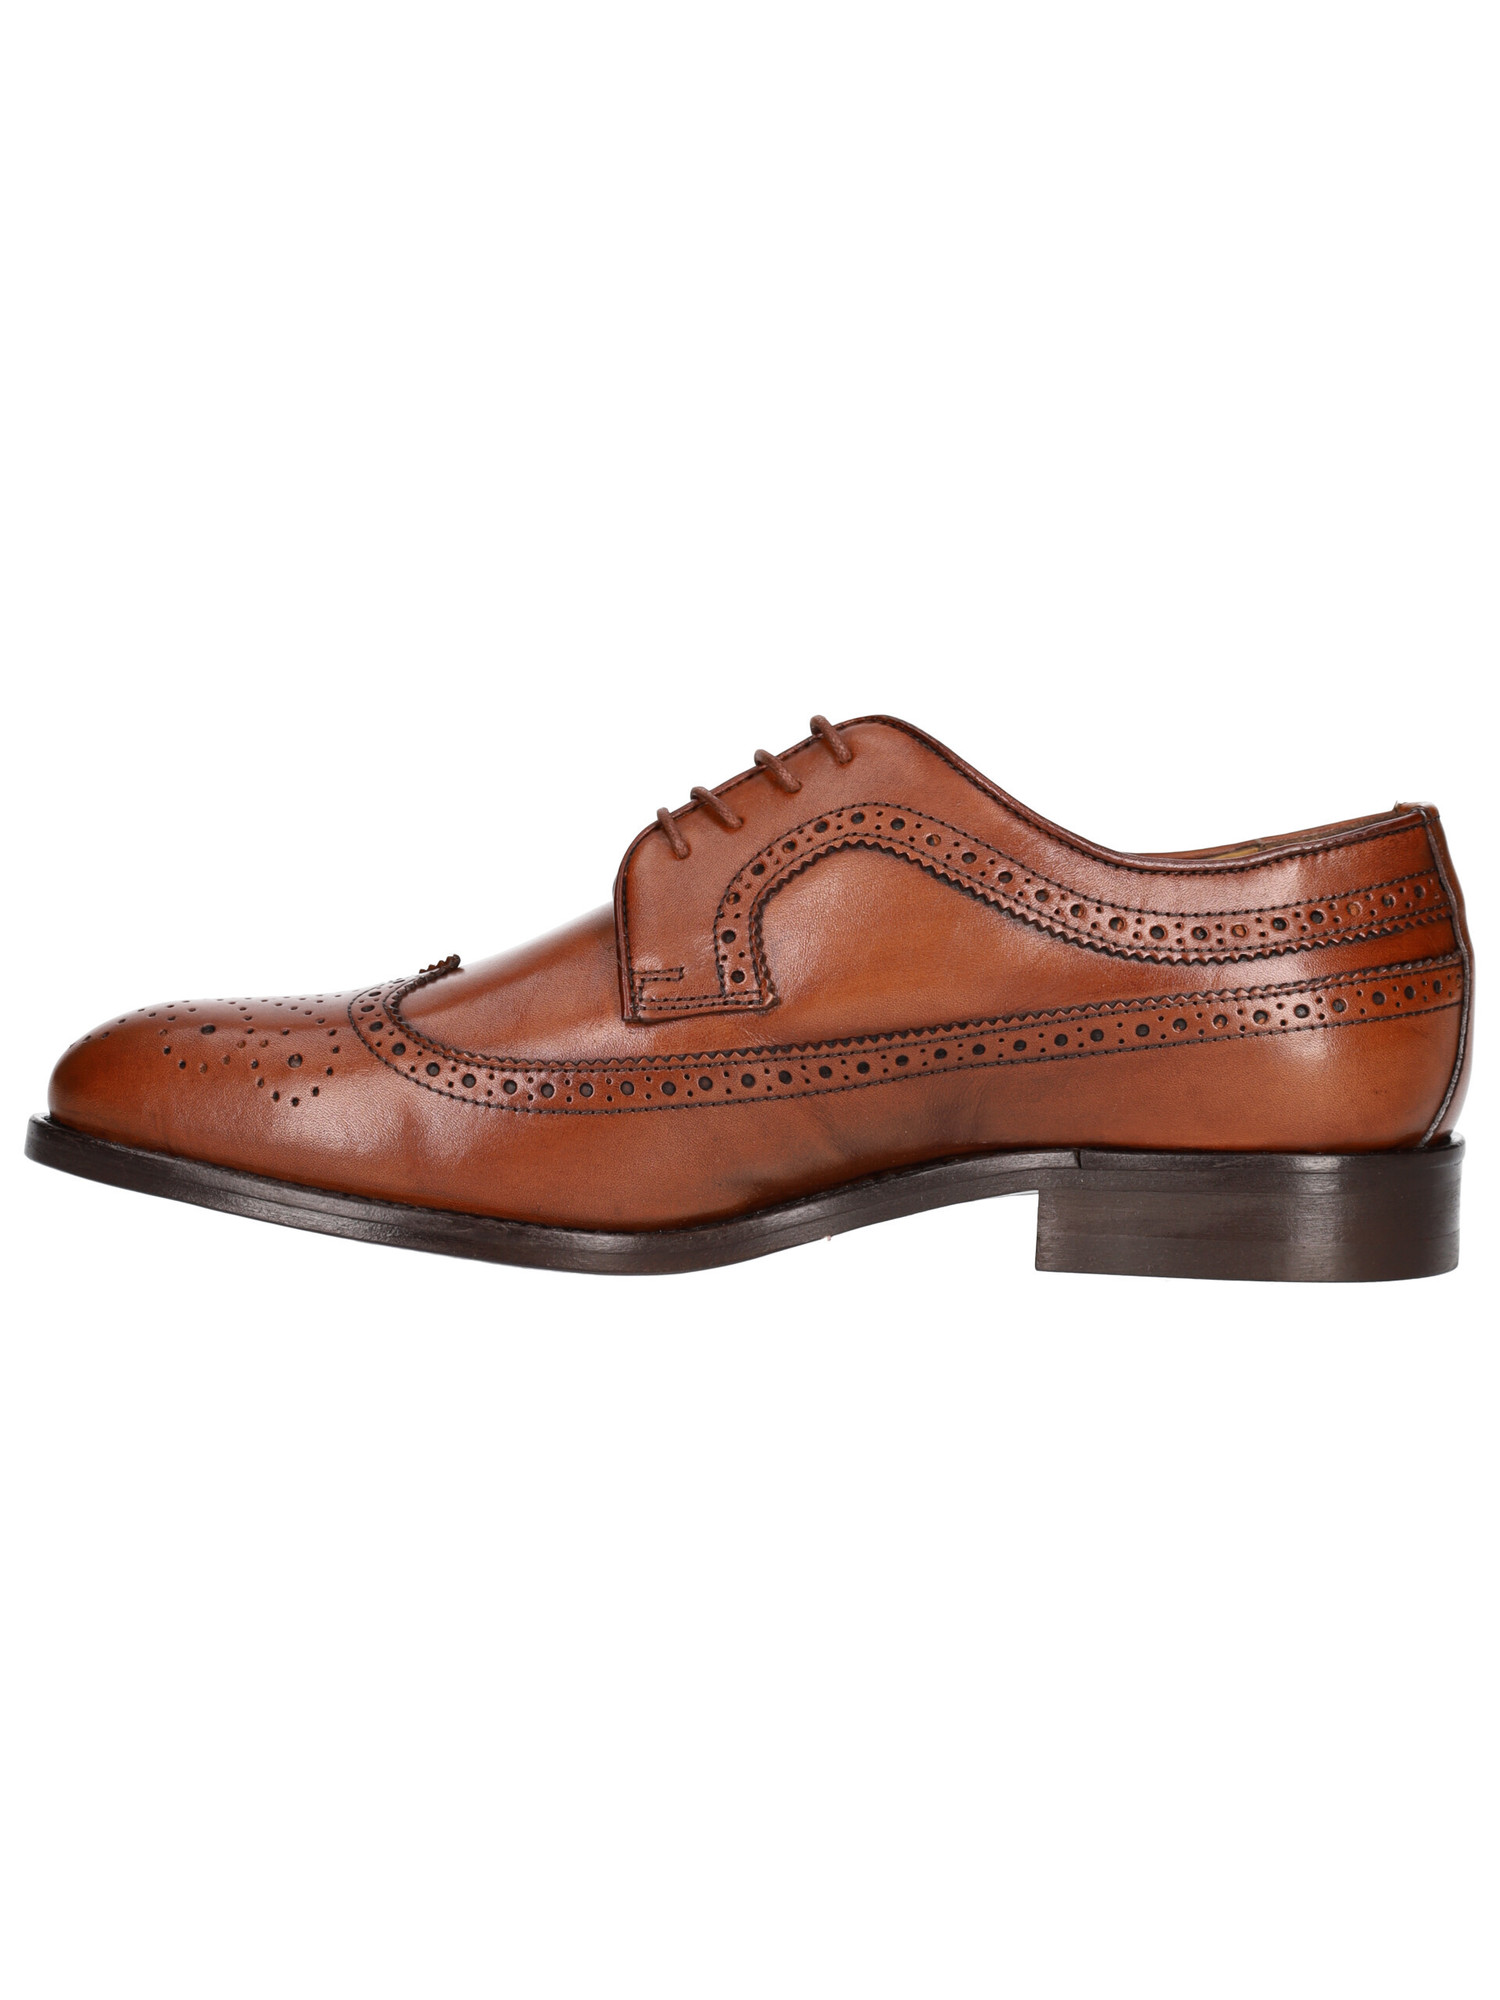 scarpa-elegante-mercanti-fiorentini-uomo-cuoio